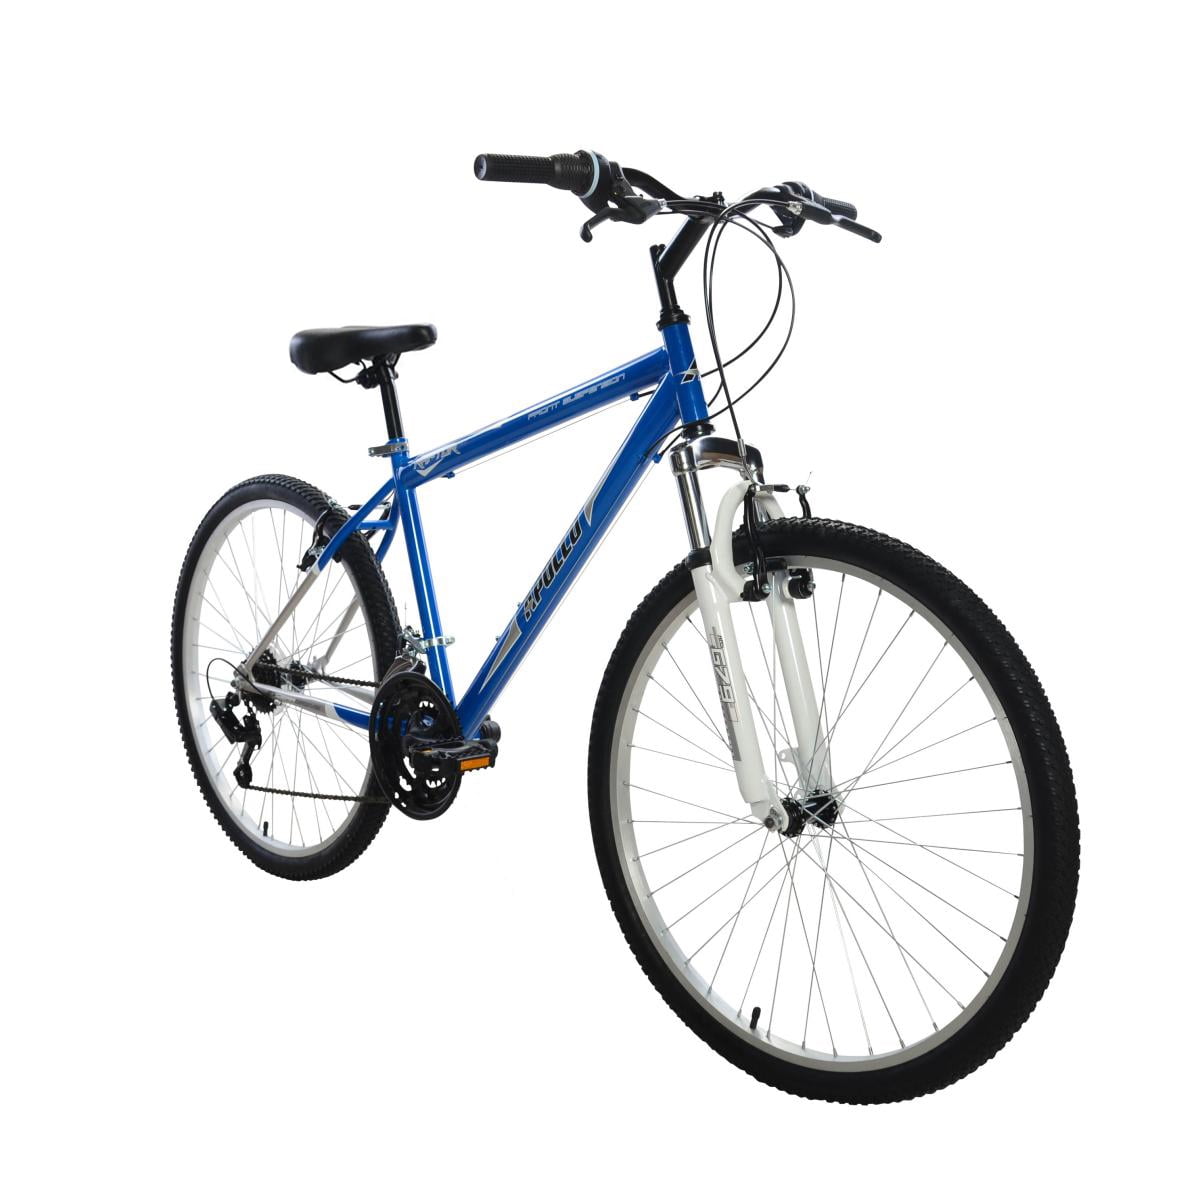 26 inch Hardtail MTB Bicycle Frame, Blue - Walmart.com